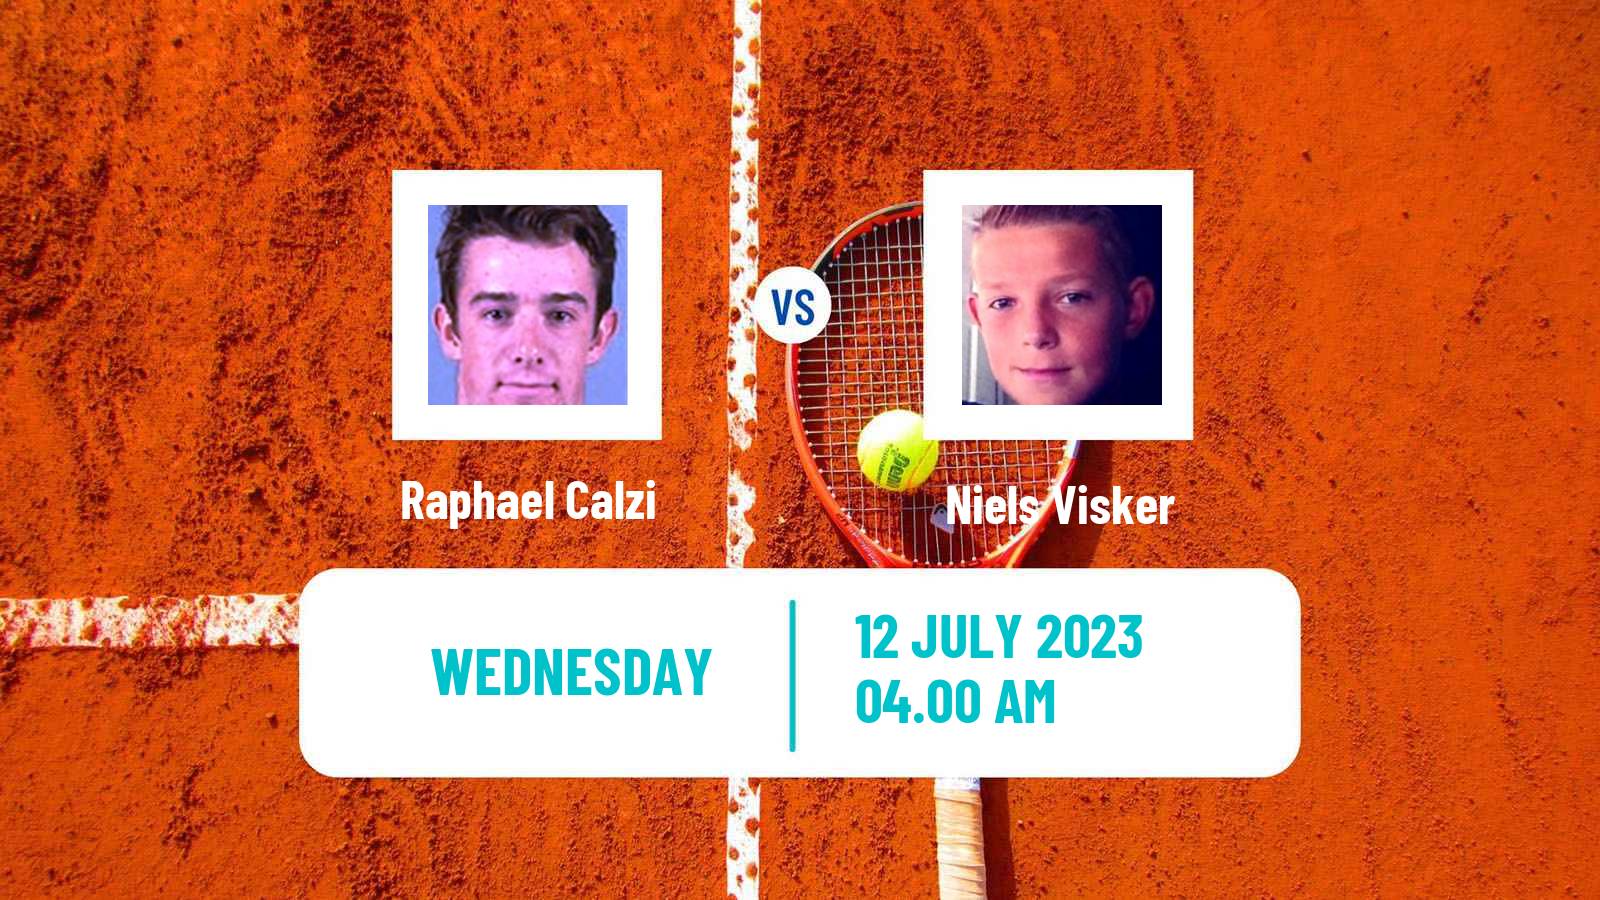 Tennis ITF M25 Esch Alzette Men Raphael Calzi - Niels Visker